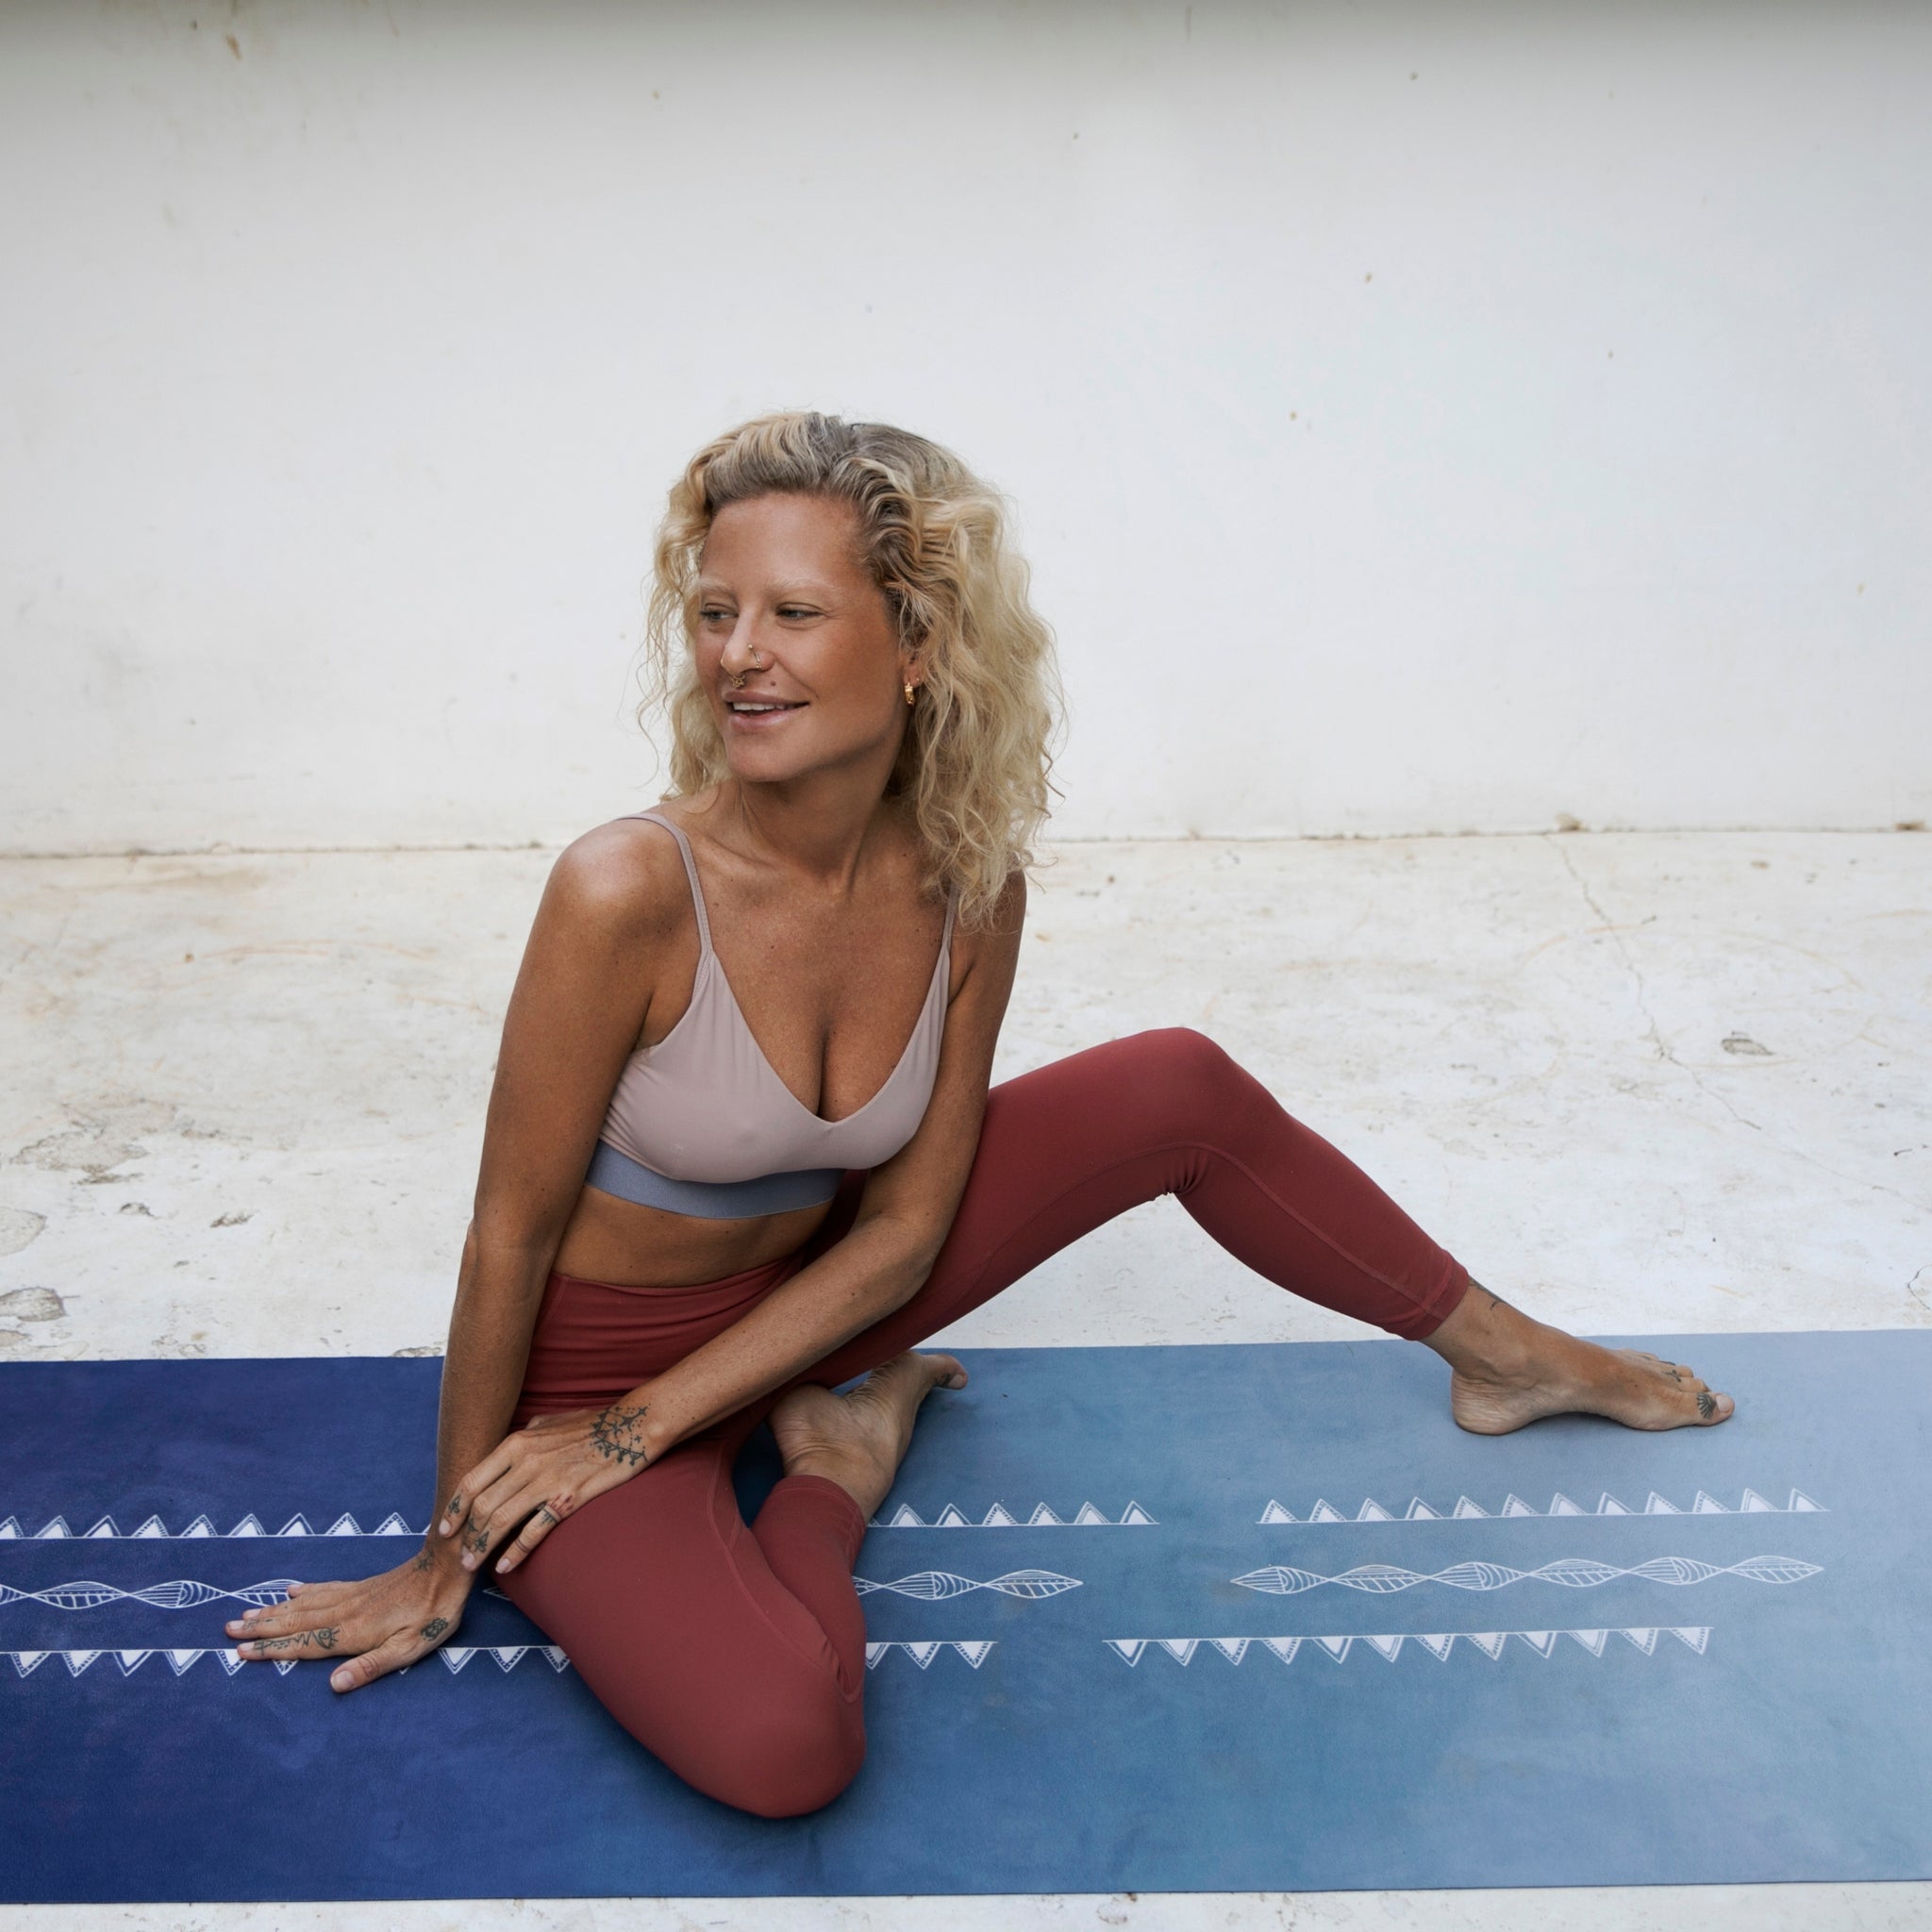 Vegan Suede with Bio-rubber backing yoga mat 